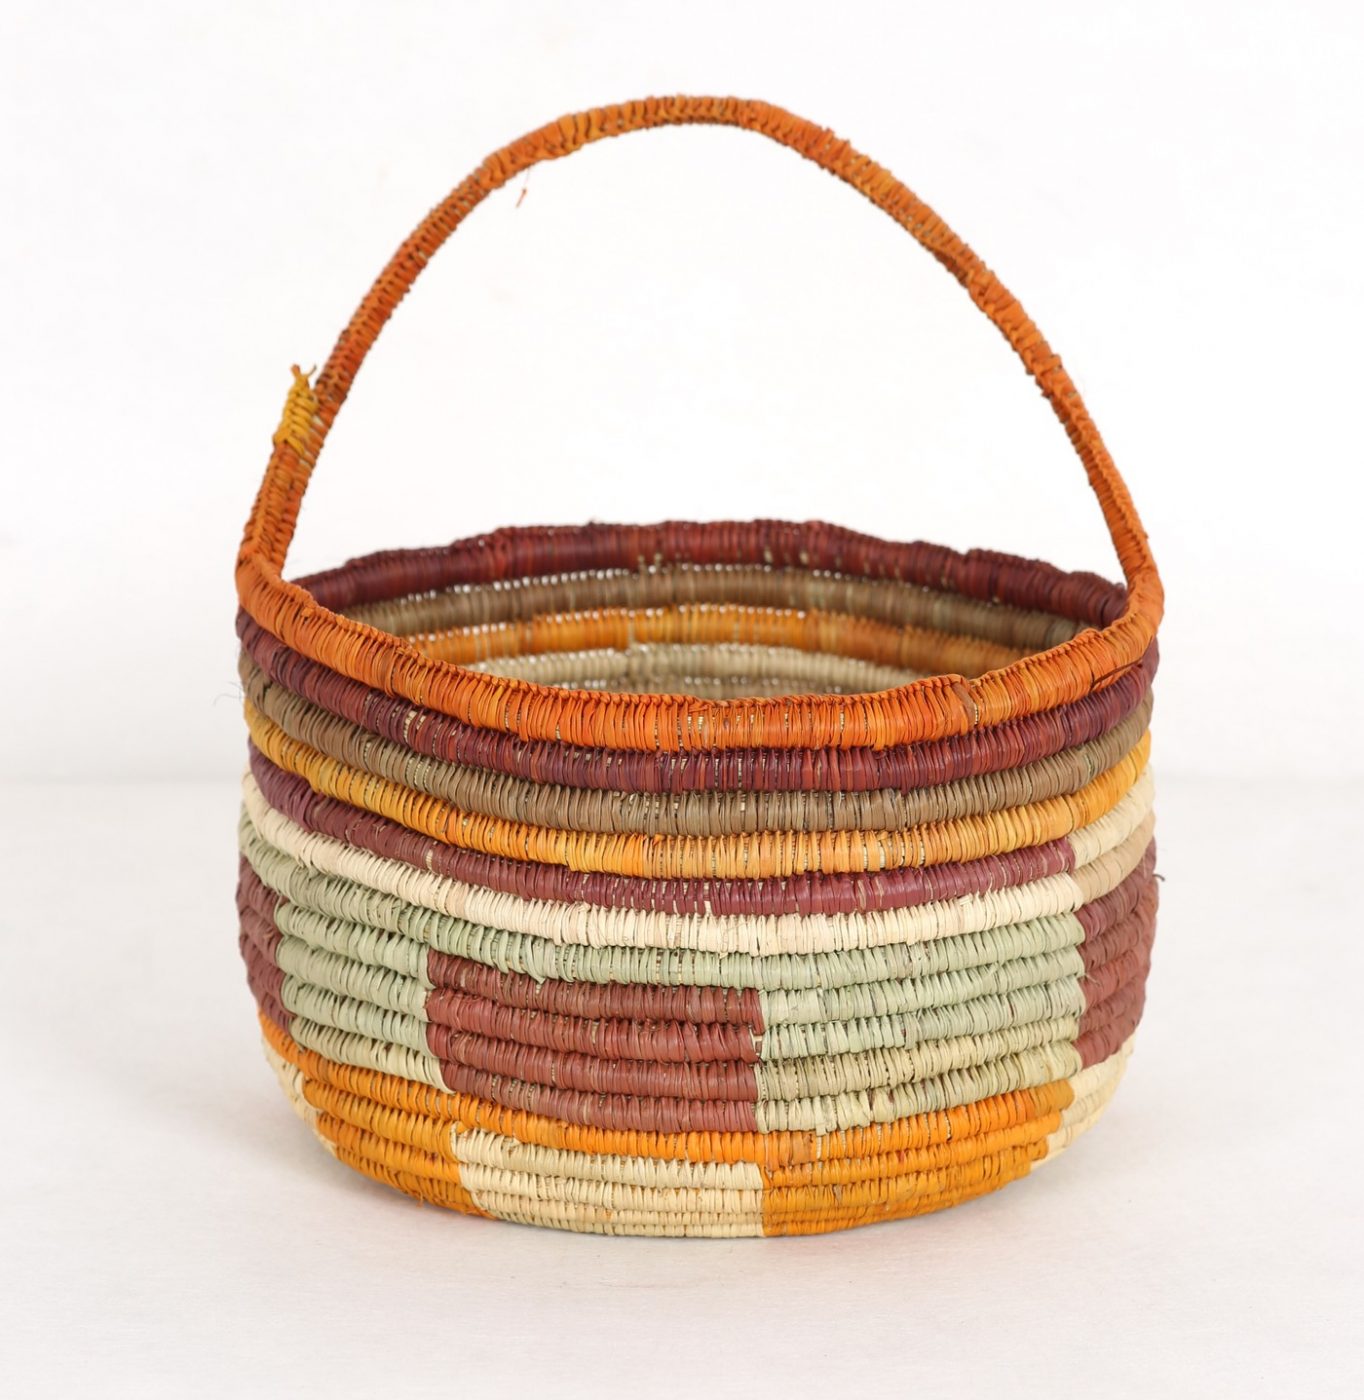 Coil Basket by Roseanne Namunjda